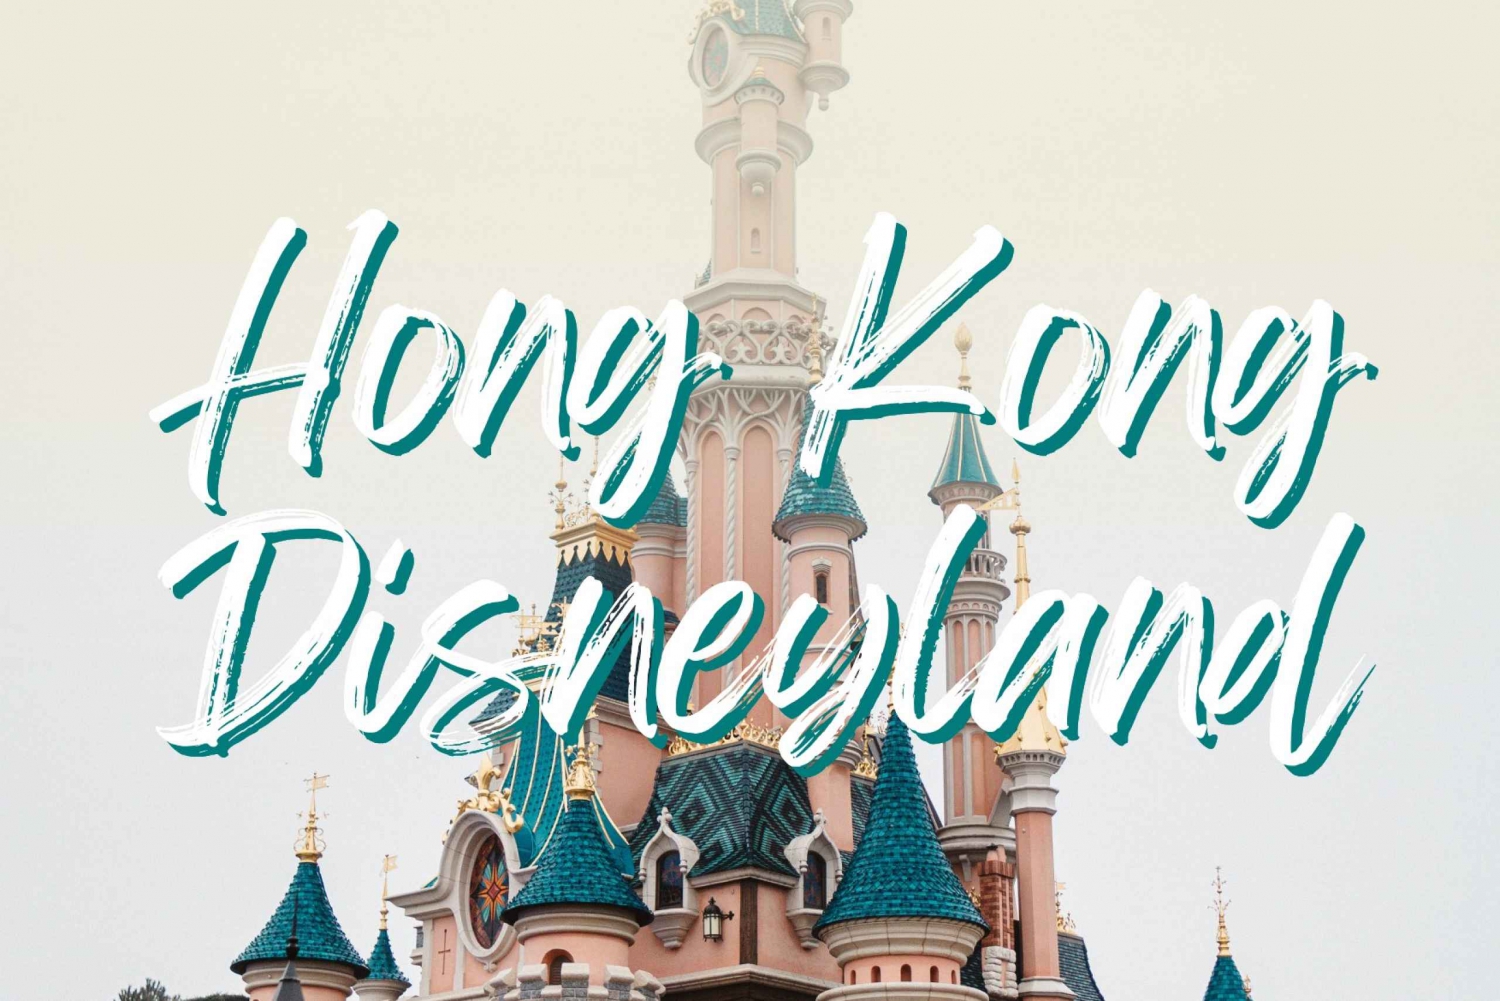 Hongkong Package 2 : Disneyland avec visite libre de la ville